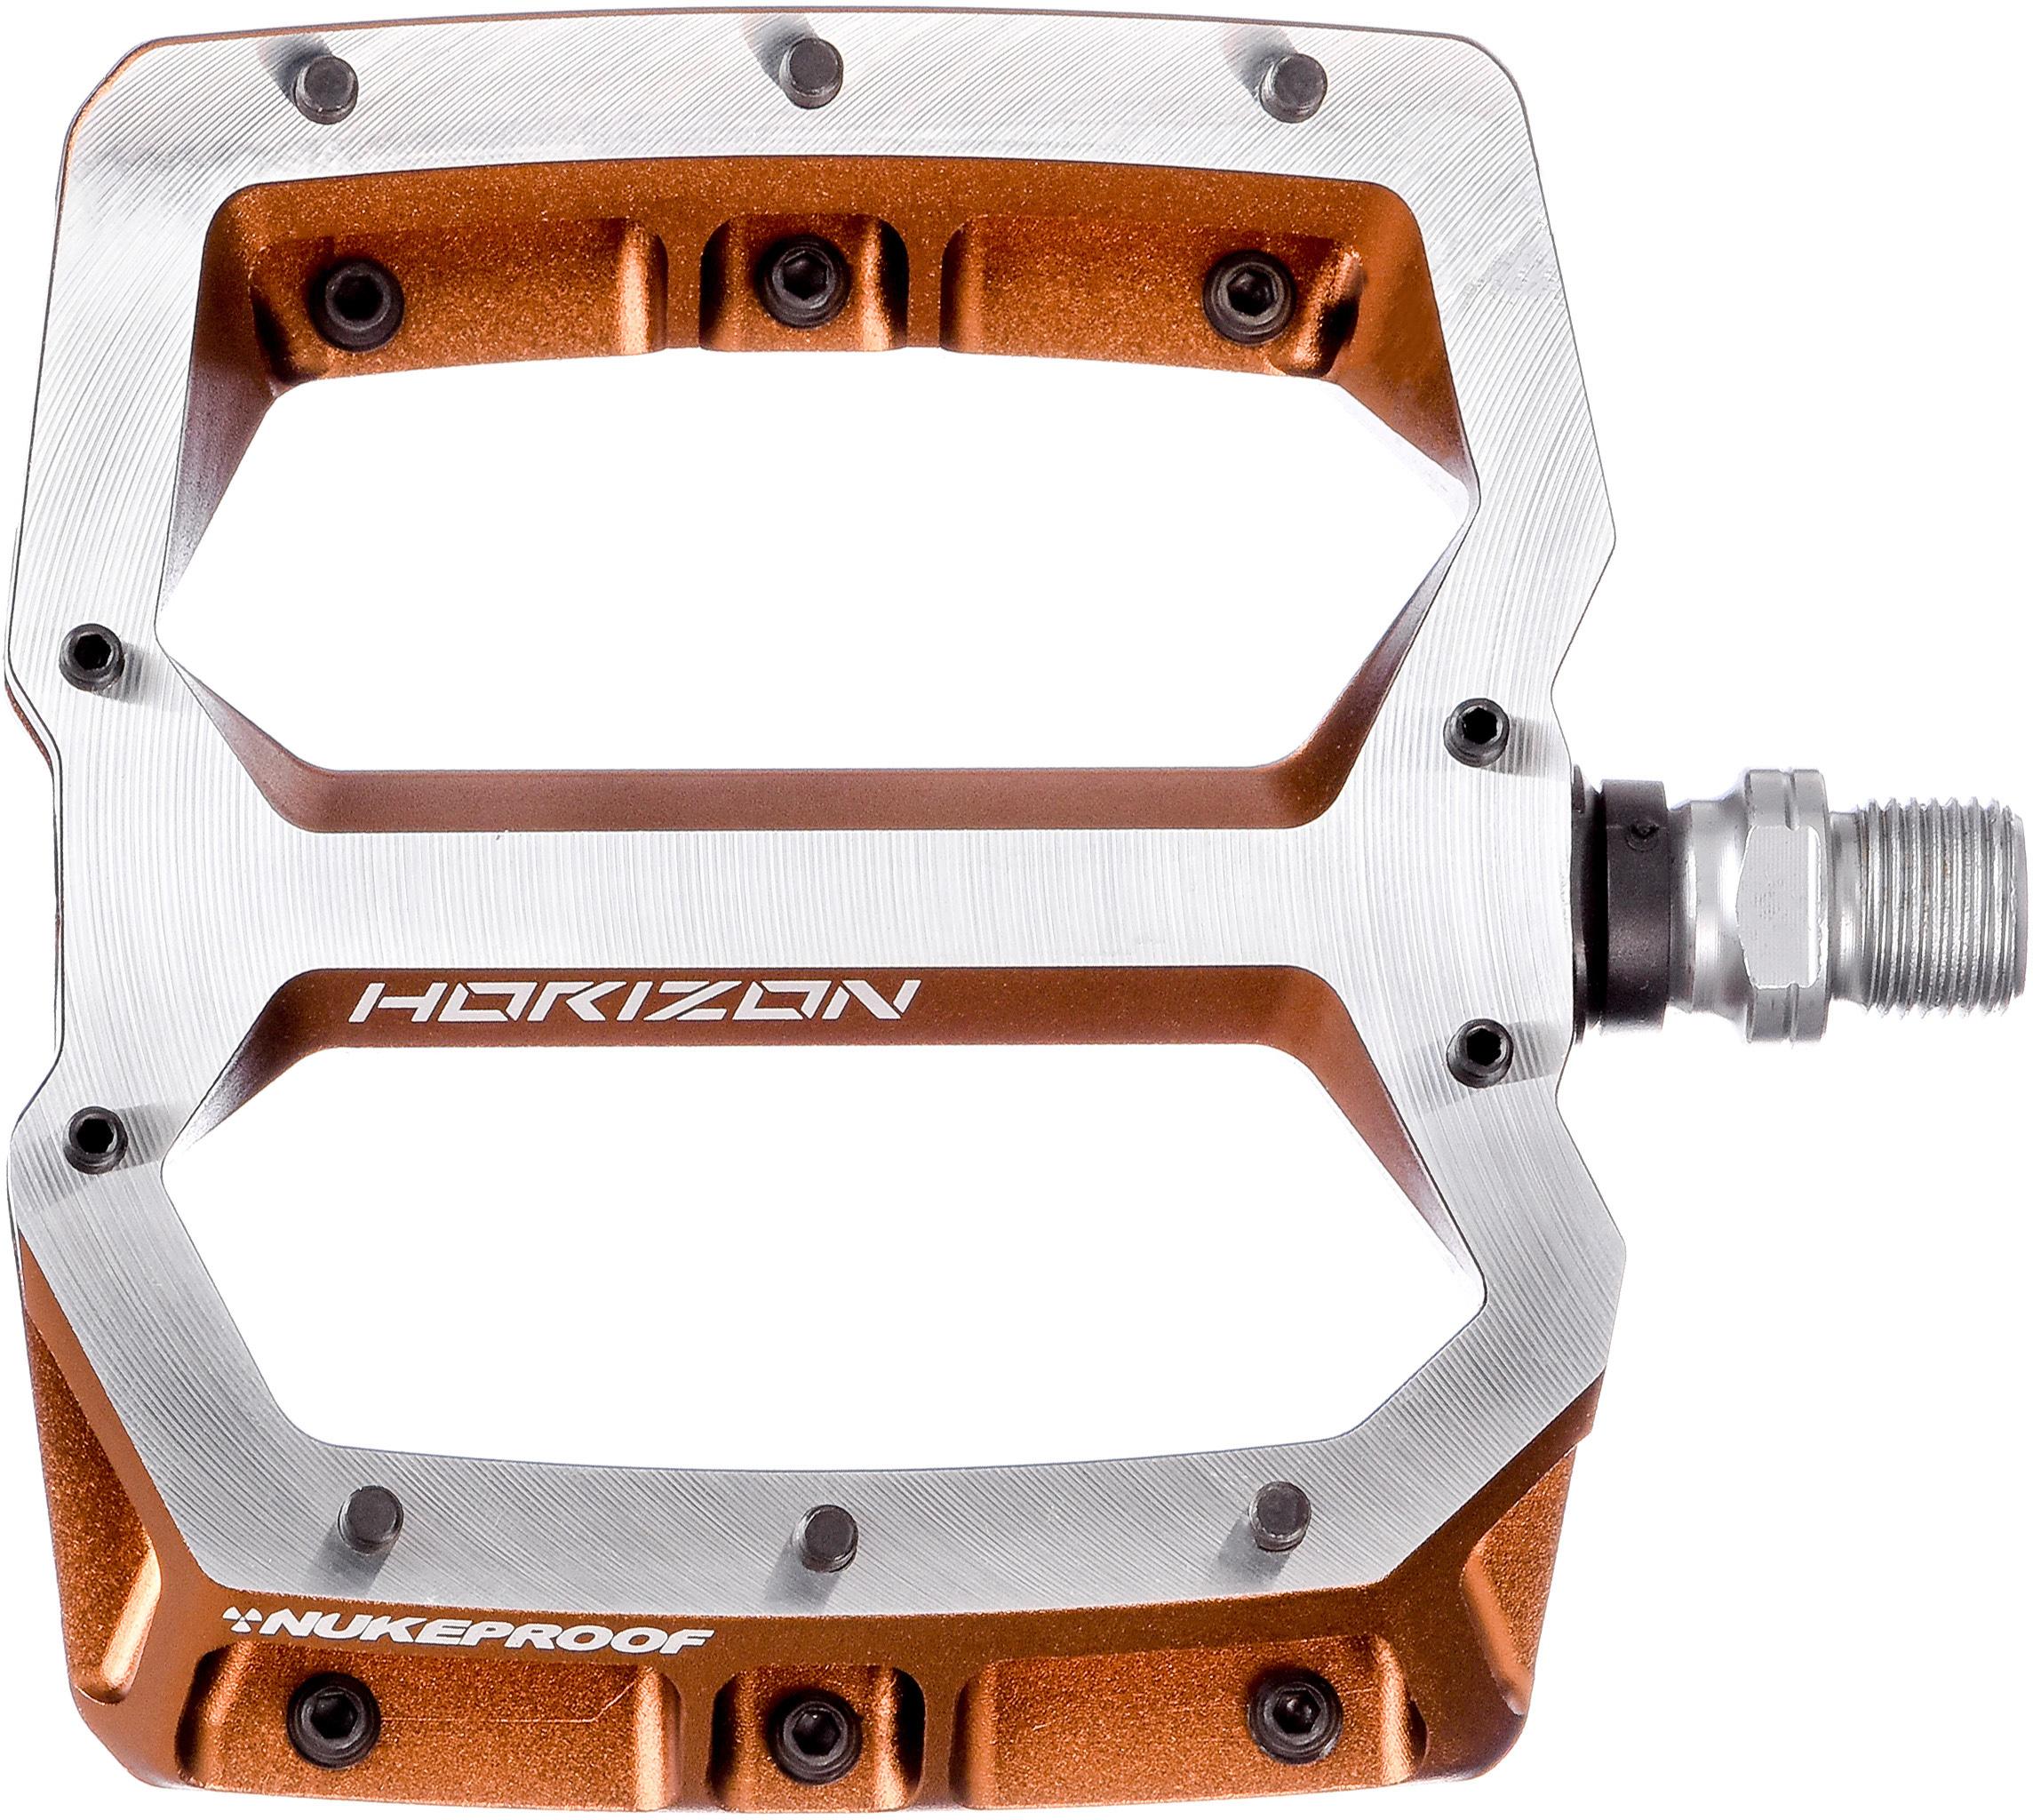 Nukeproof Horizon Pro Downhill Flat Pedals - Copper